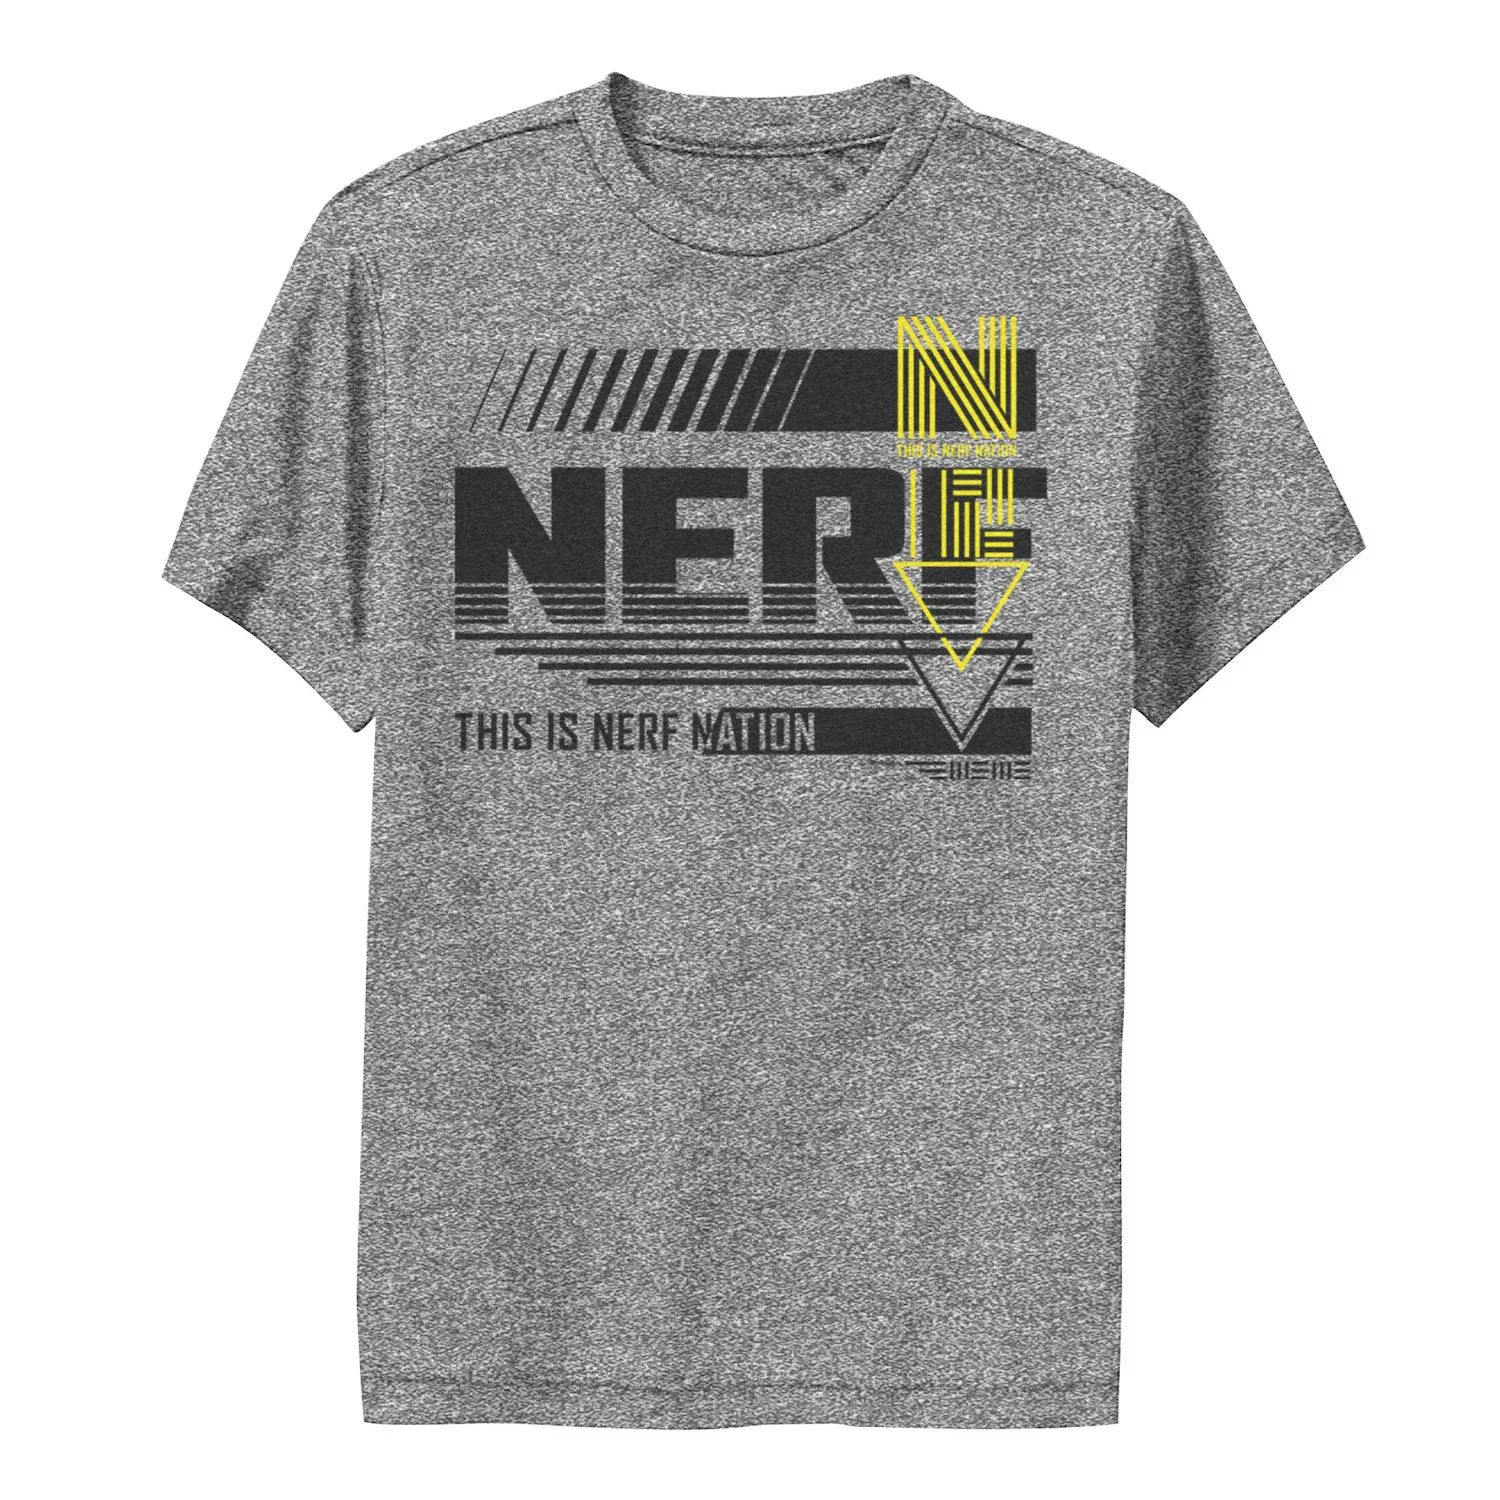 Футболка с графикой Nerf This Is Nerf Nation Mashup C1 для мальчиков 8–20 лет Nerf толстовка с плакатом nerf this is nerf nation для мальчиков 8–20 лет nerf